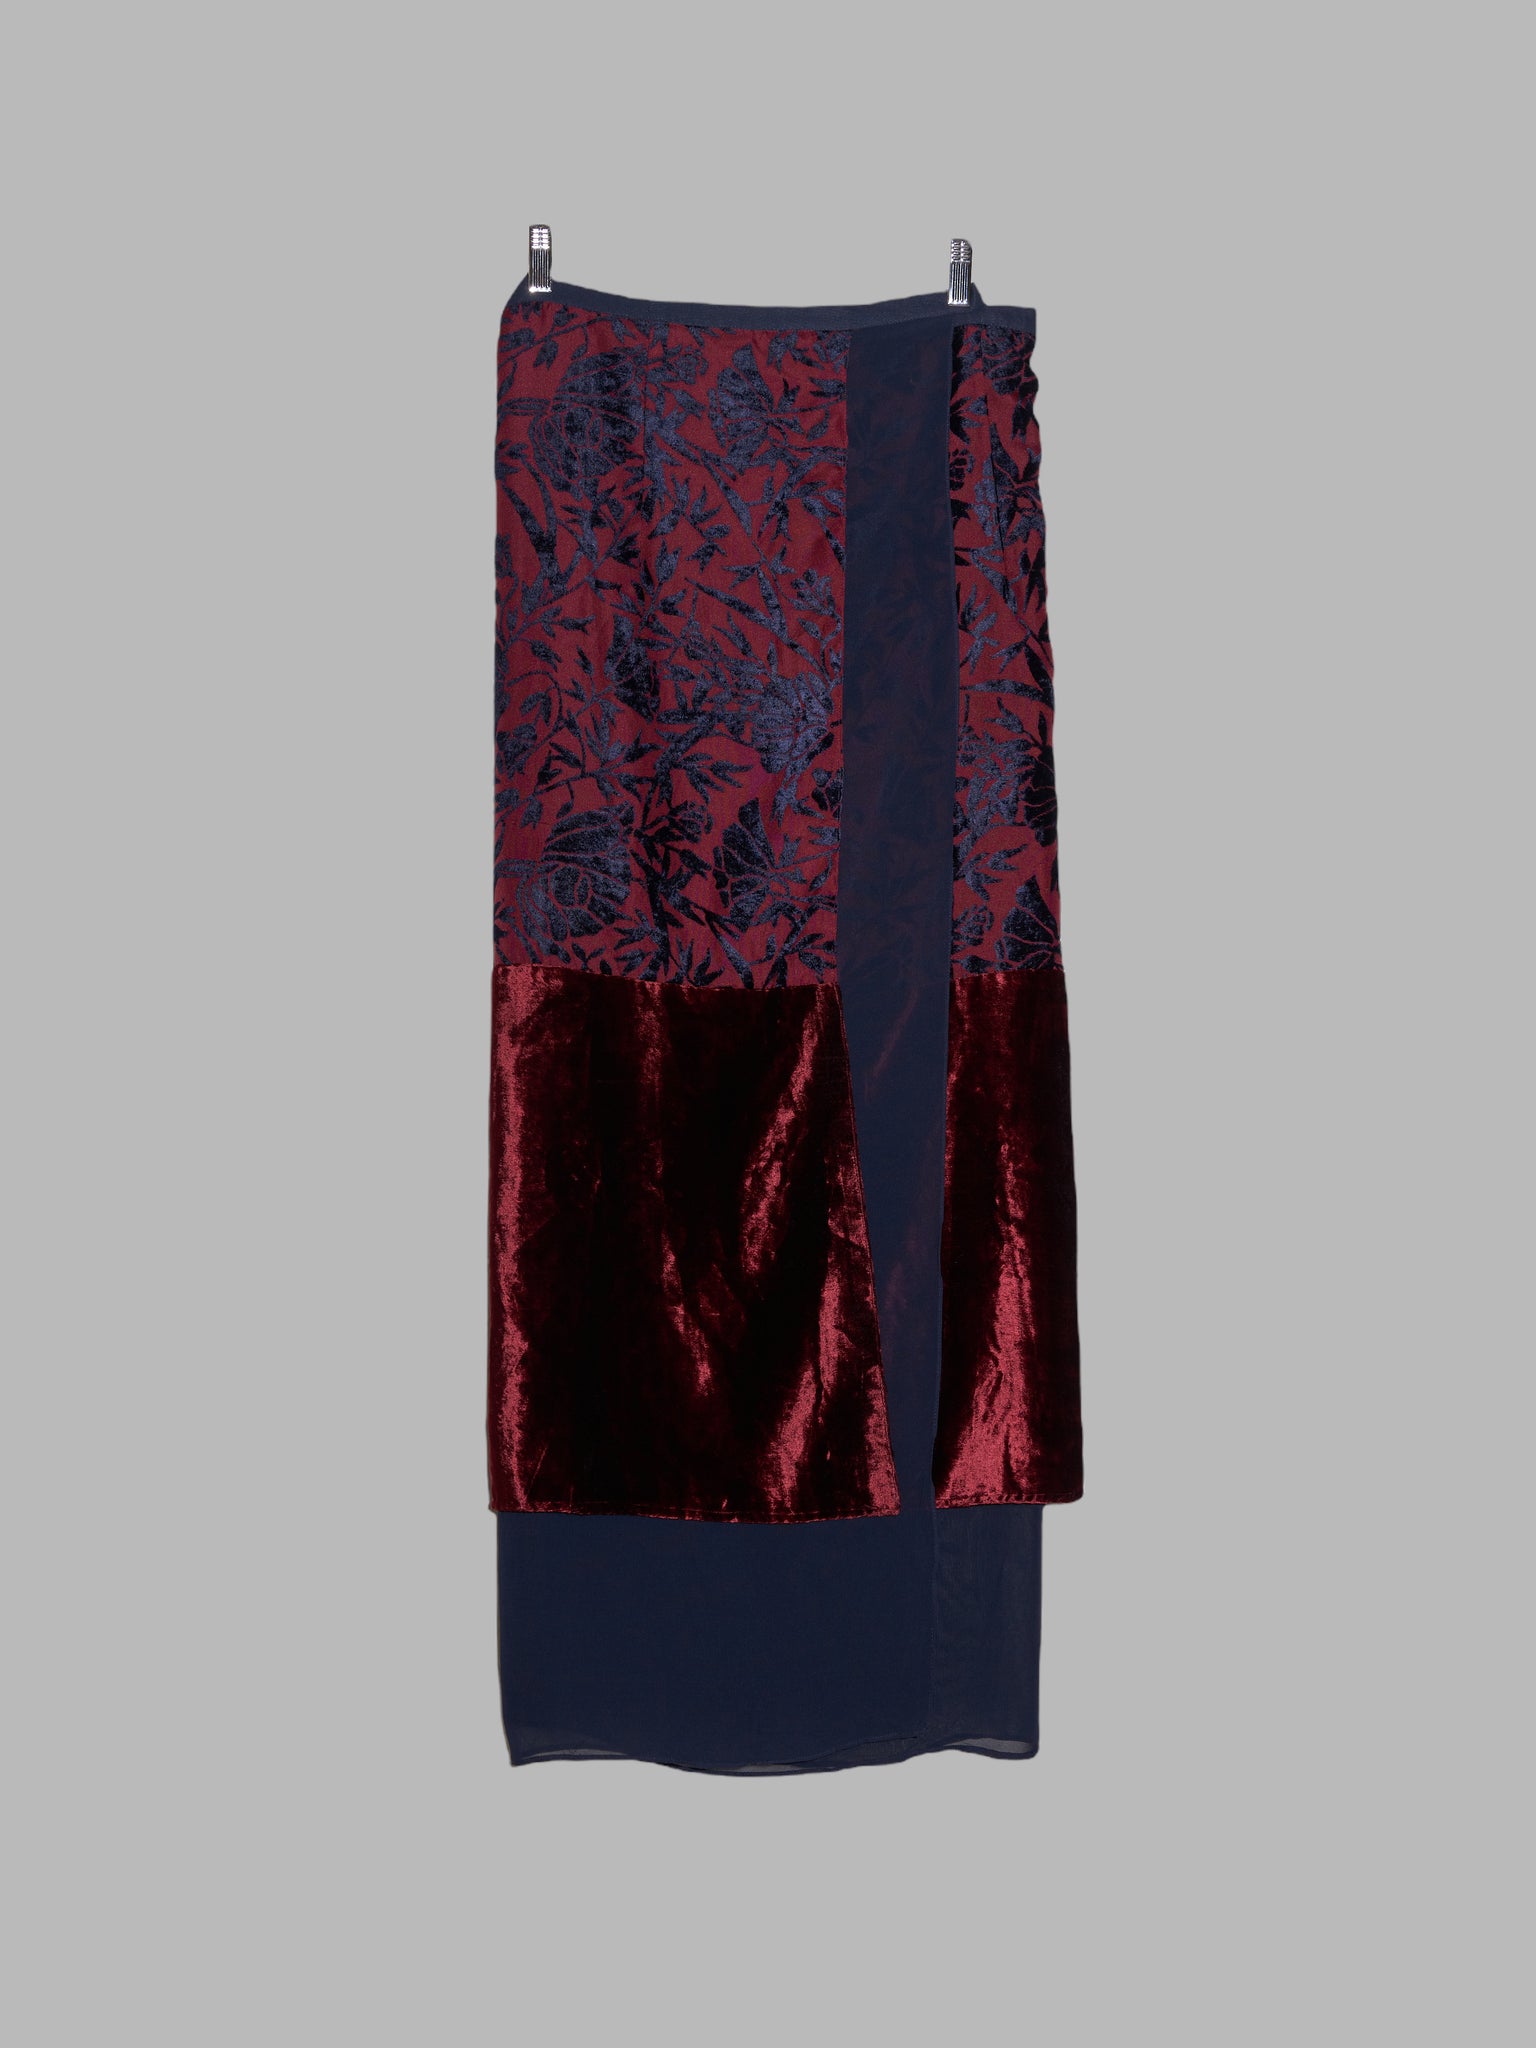 Lawrence Steele navy and burgundy floral velvet sheer crepe wrap skirt